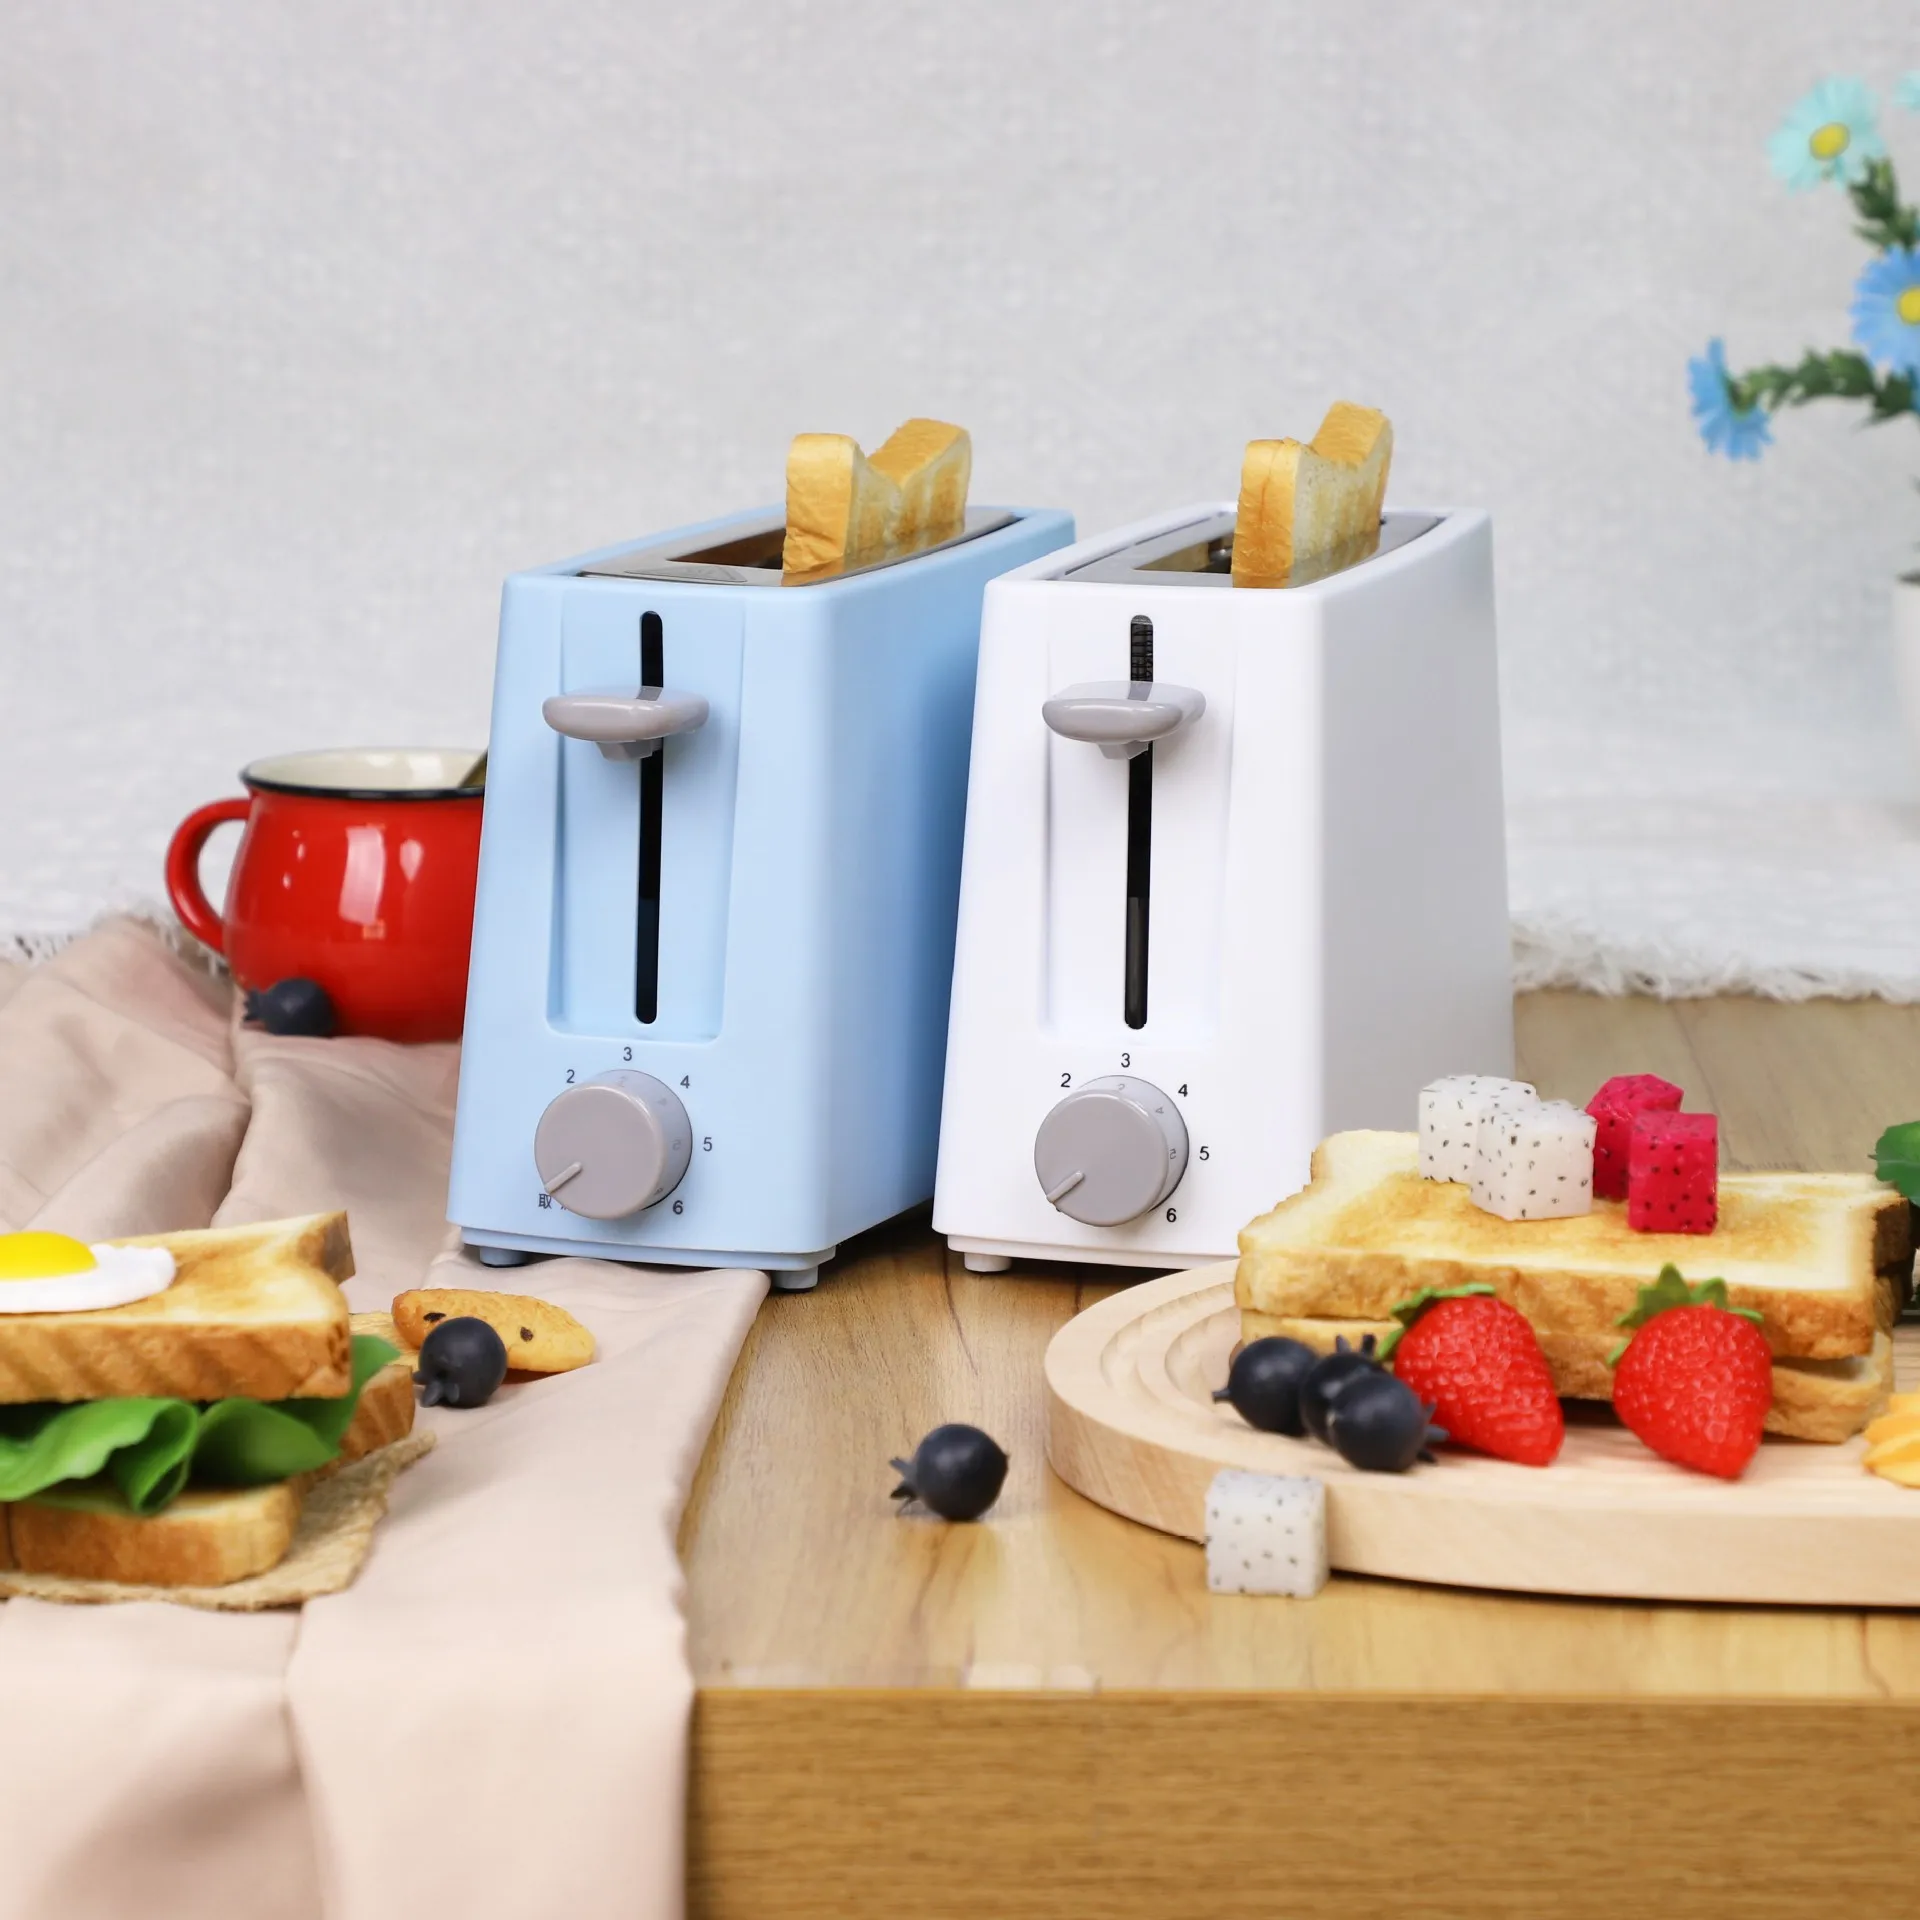 https://ae01.alicdn.com/kf/S3c917f2a64874bcea277c0ec7457f598O/Electric-Toaster-Household-Automatic-Bread-Baking-Maker-Breakfast-Machine-Toast-Sandwich-Grill-Oven-1-Slice.jpg